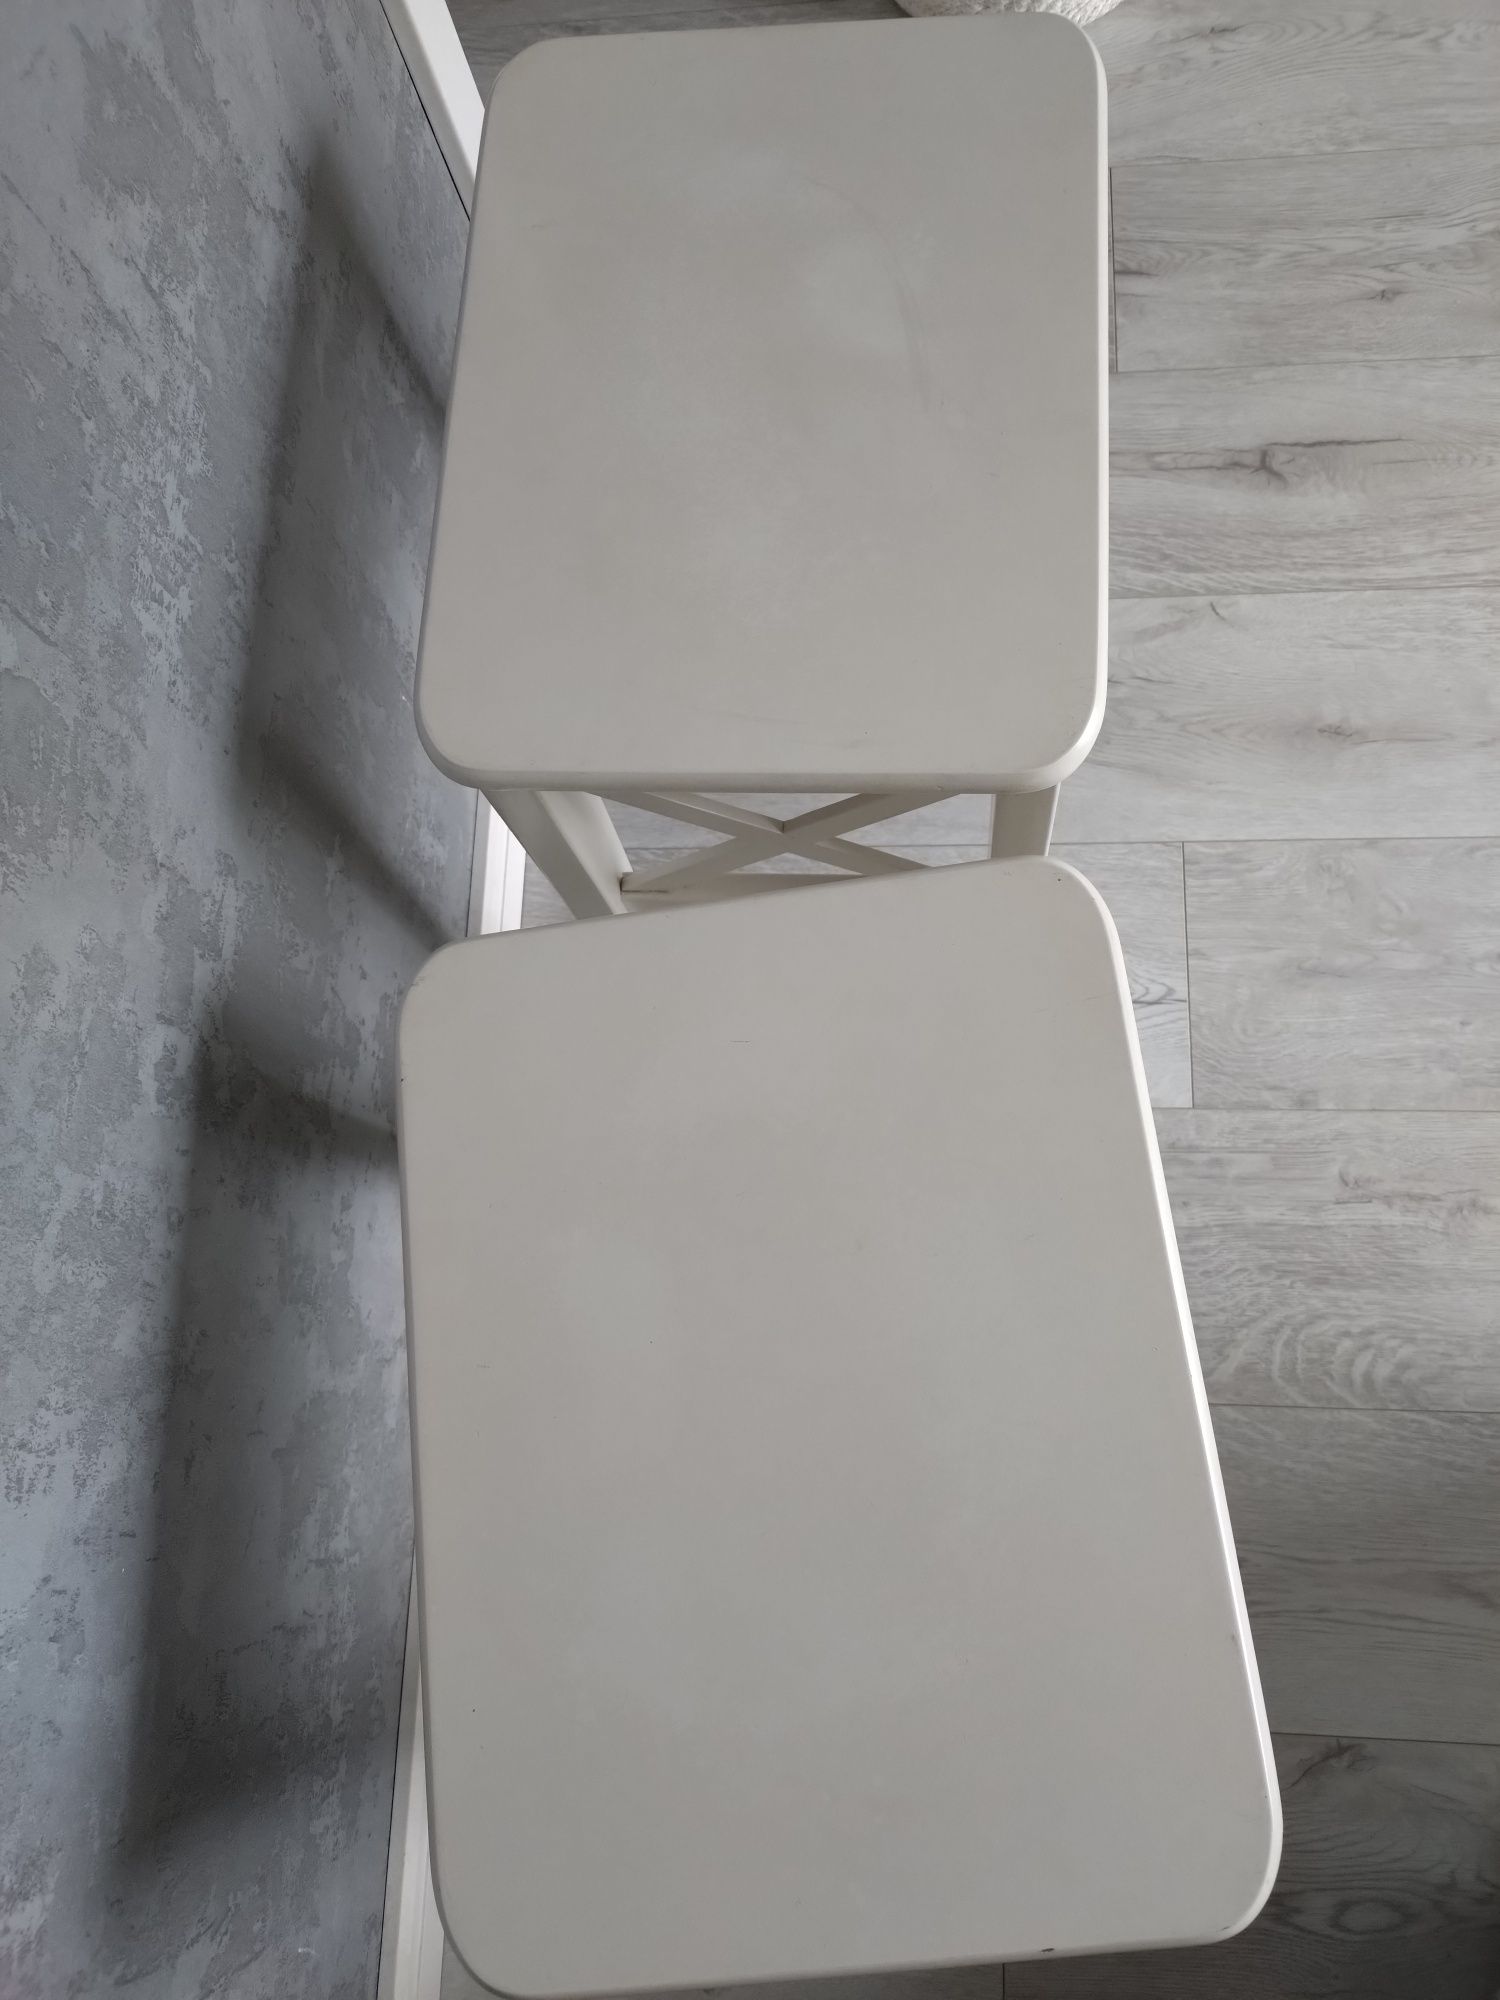 Ikea ingolf taboret stołek